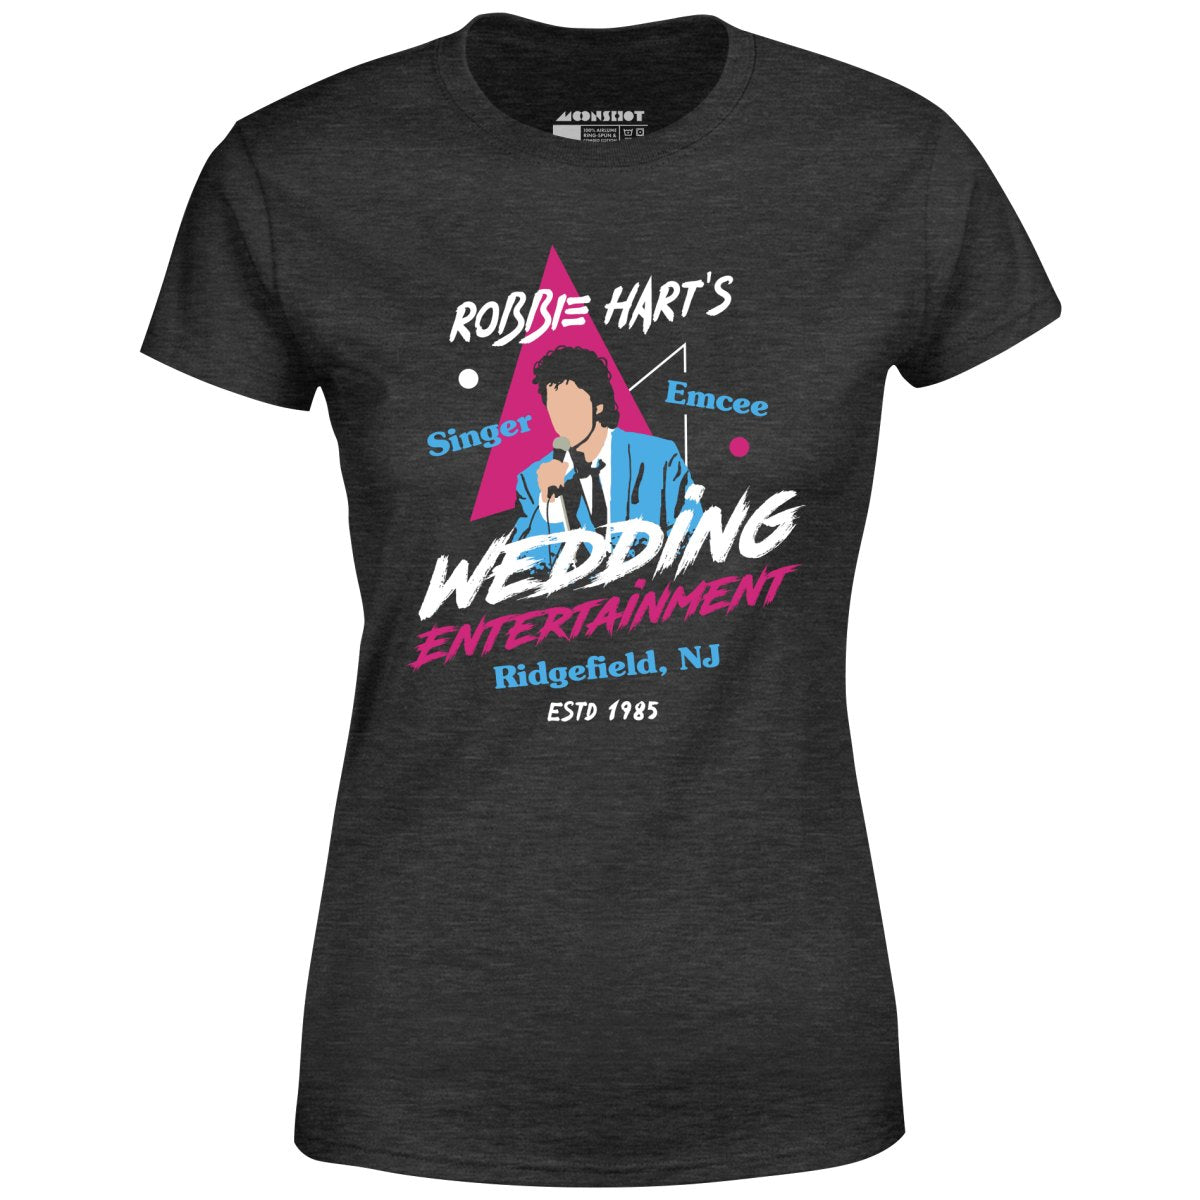 Robbie Hart's Wedding Entertainment - Women's T-Shirt